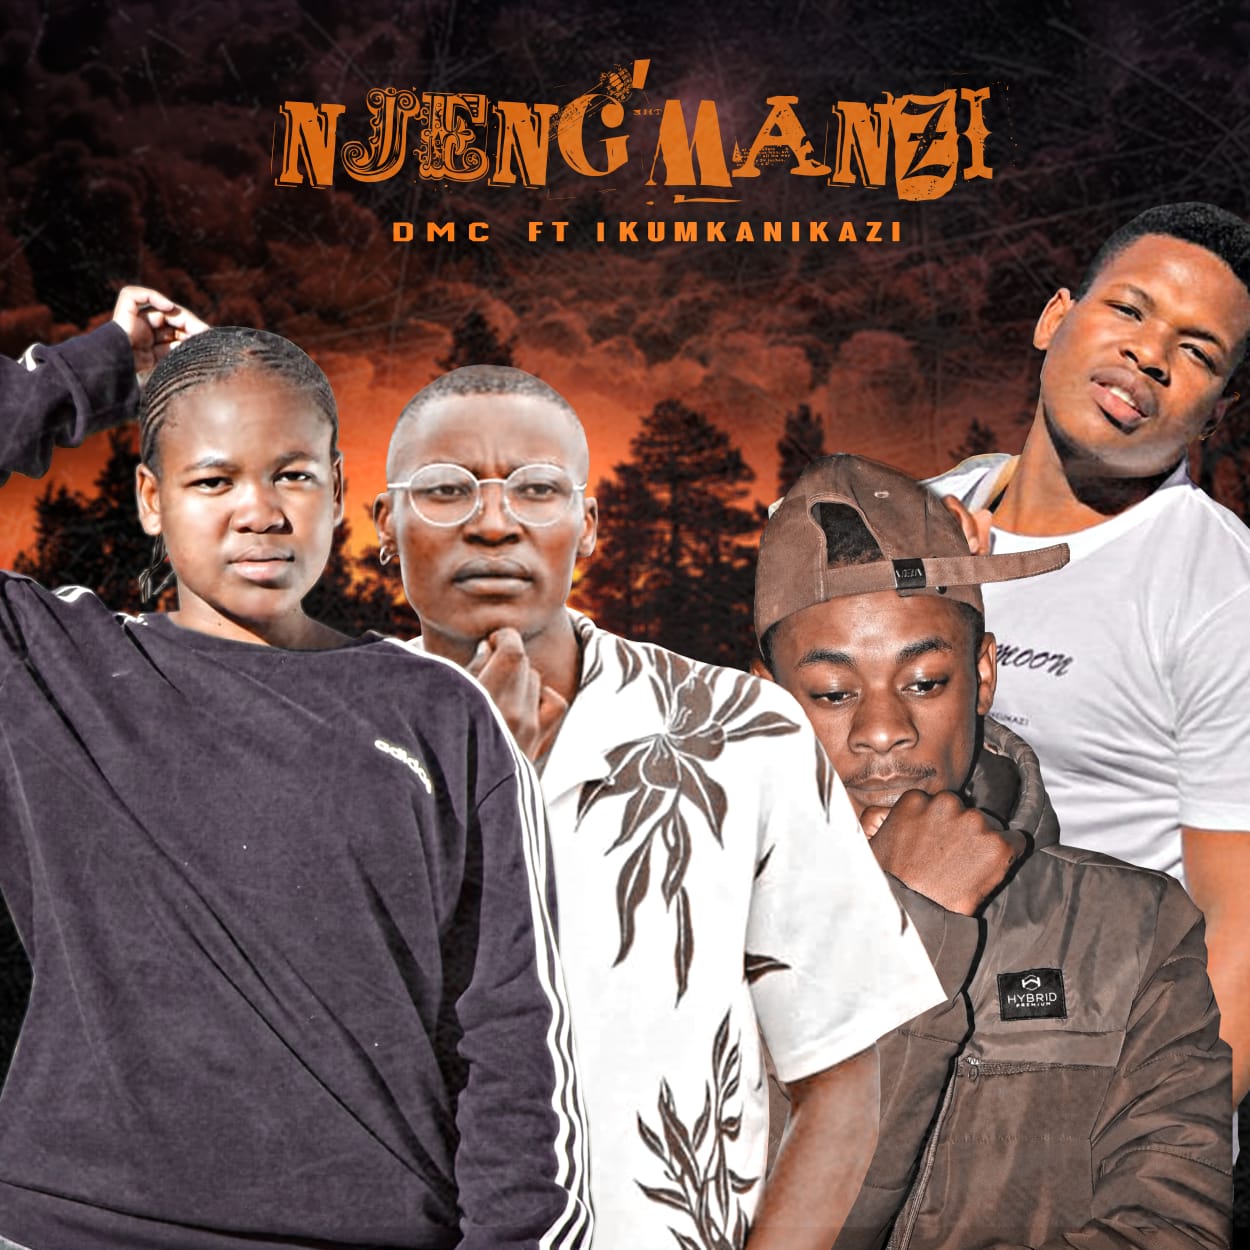 Njeng'manzi - DMC's FT iKumkanikazi